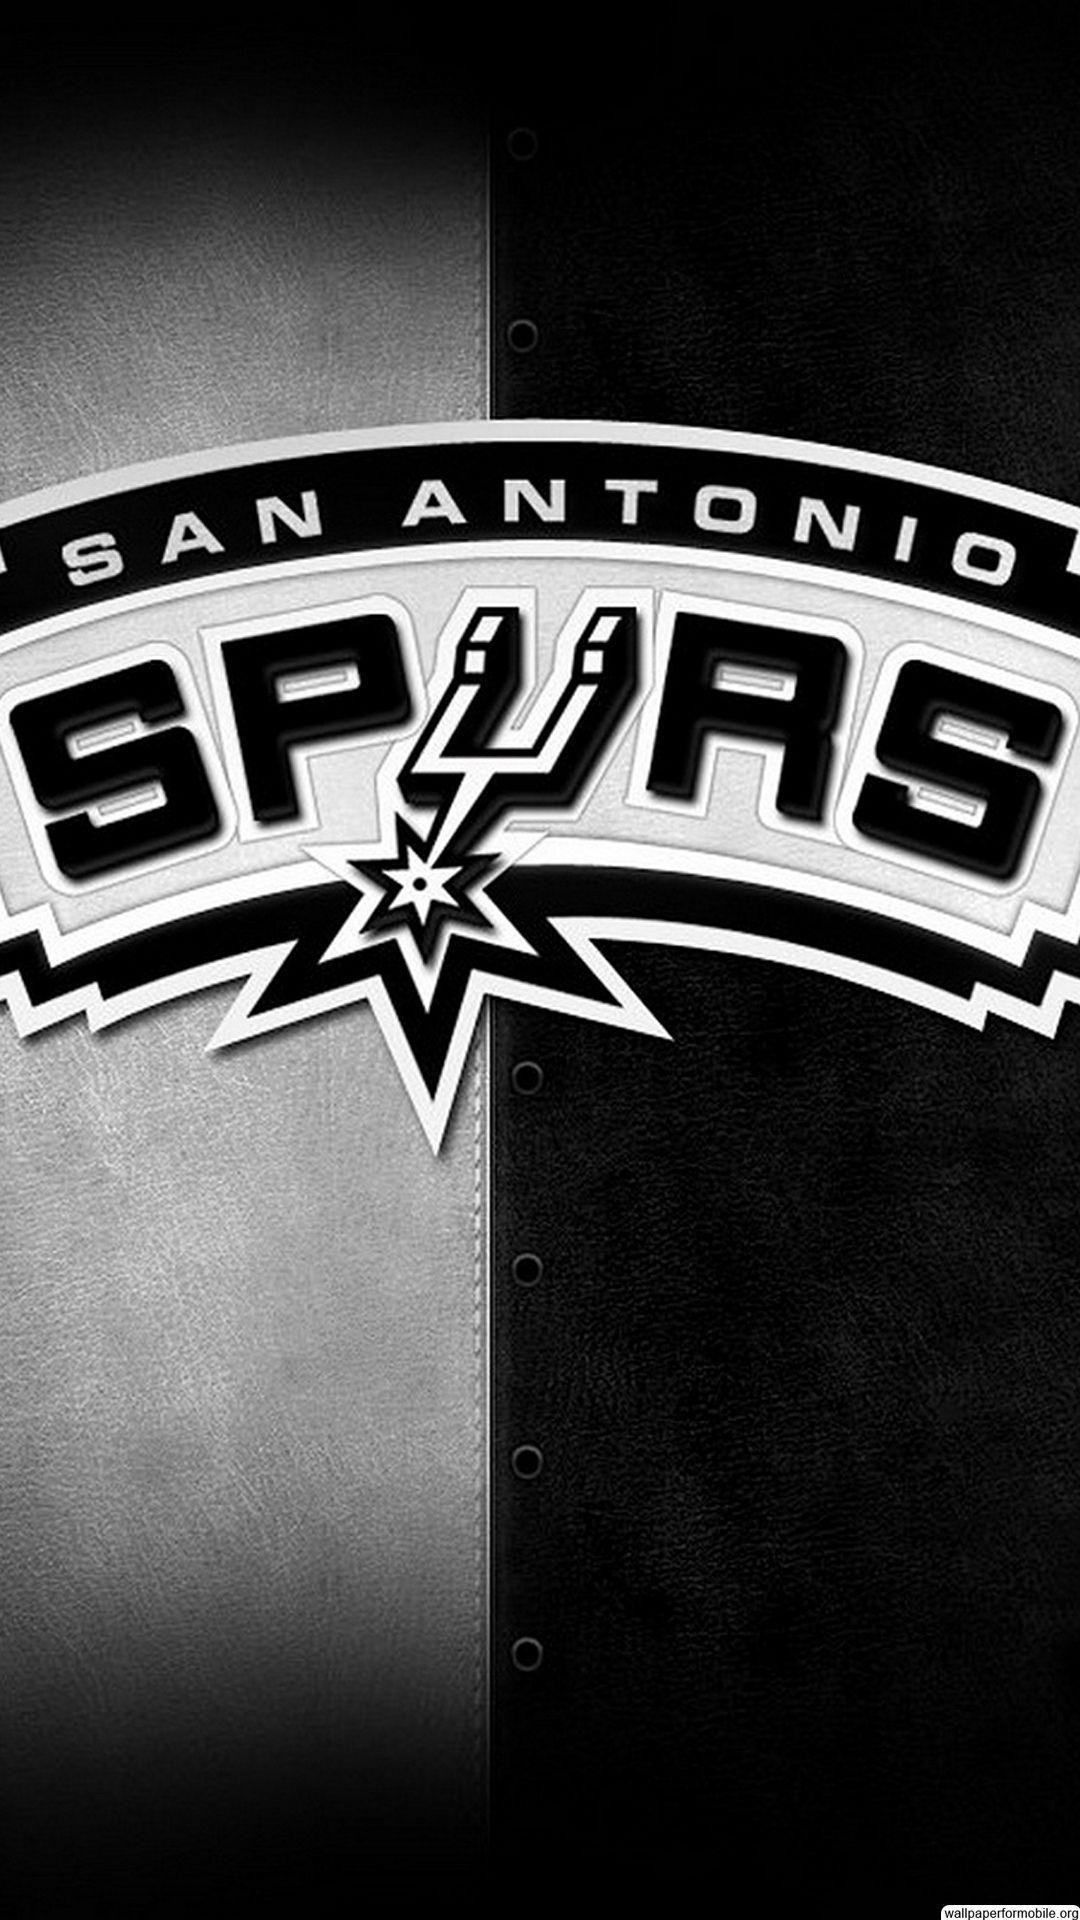 San Antonio Spurs Wallpapers ·① WallpaperTag